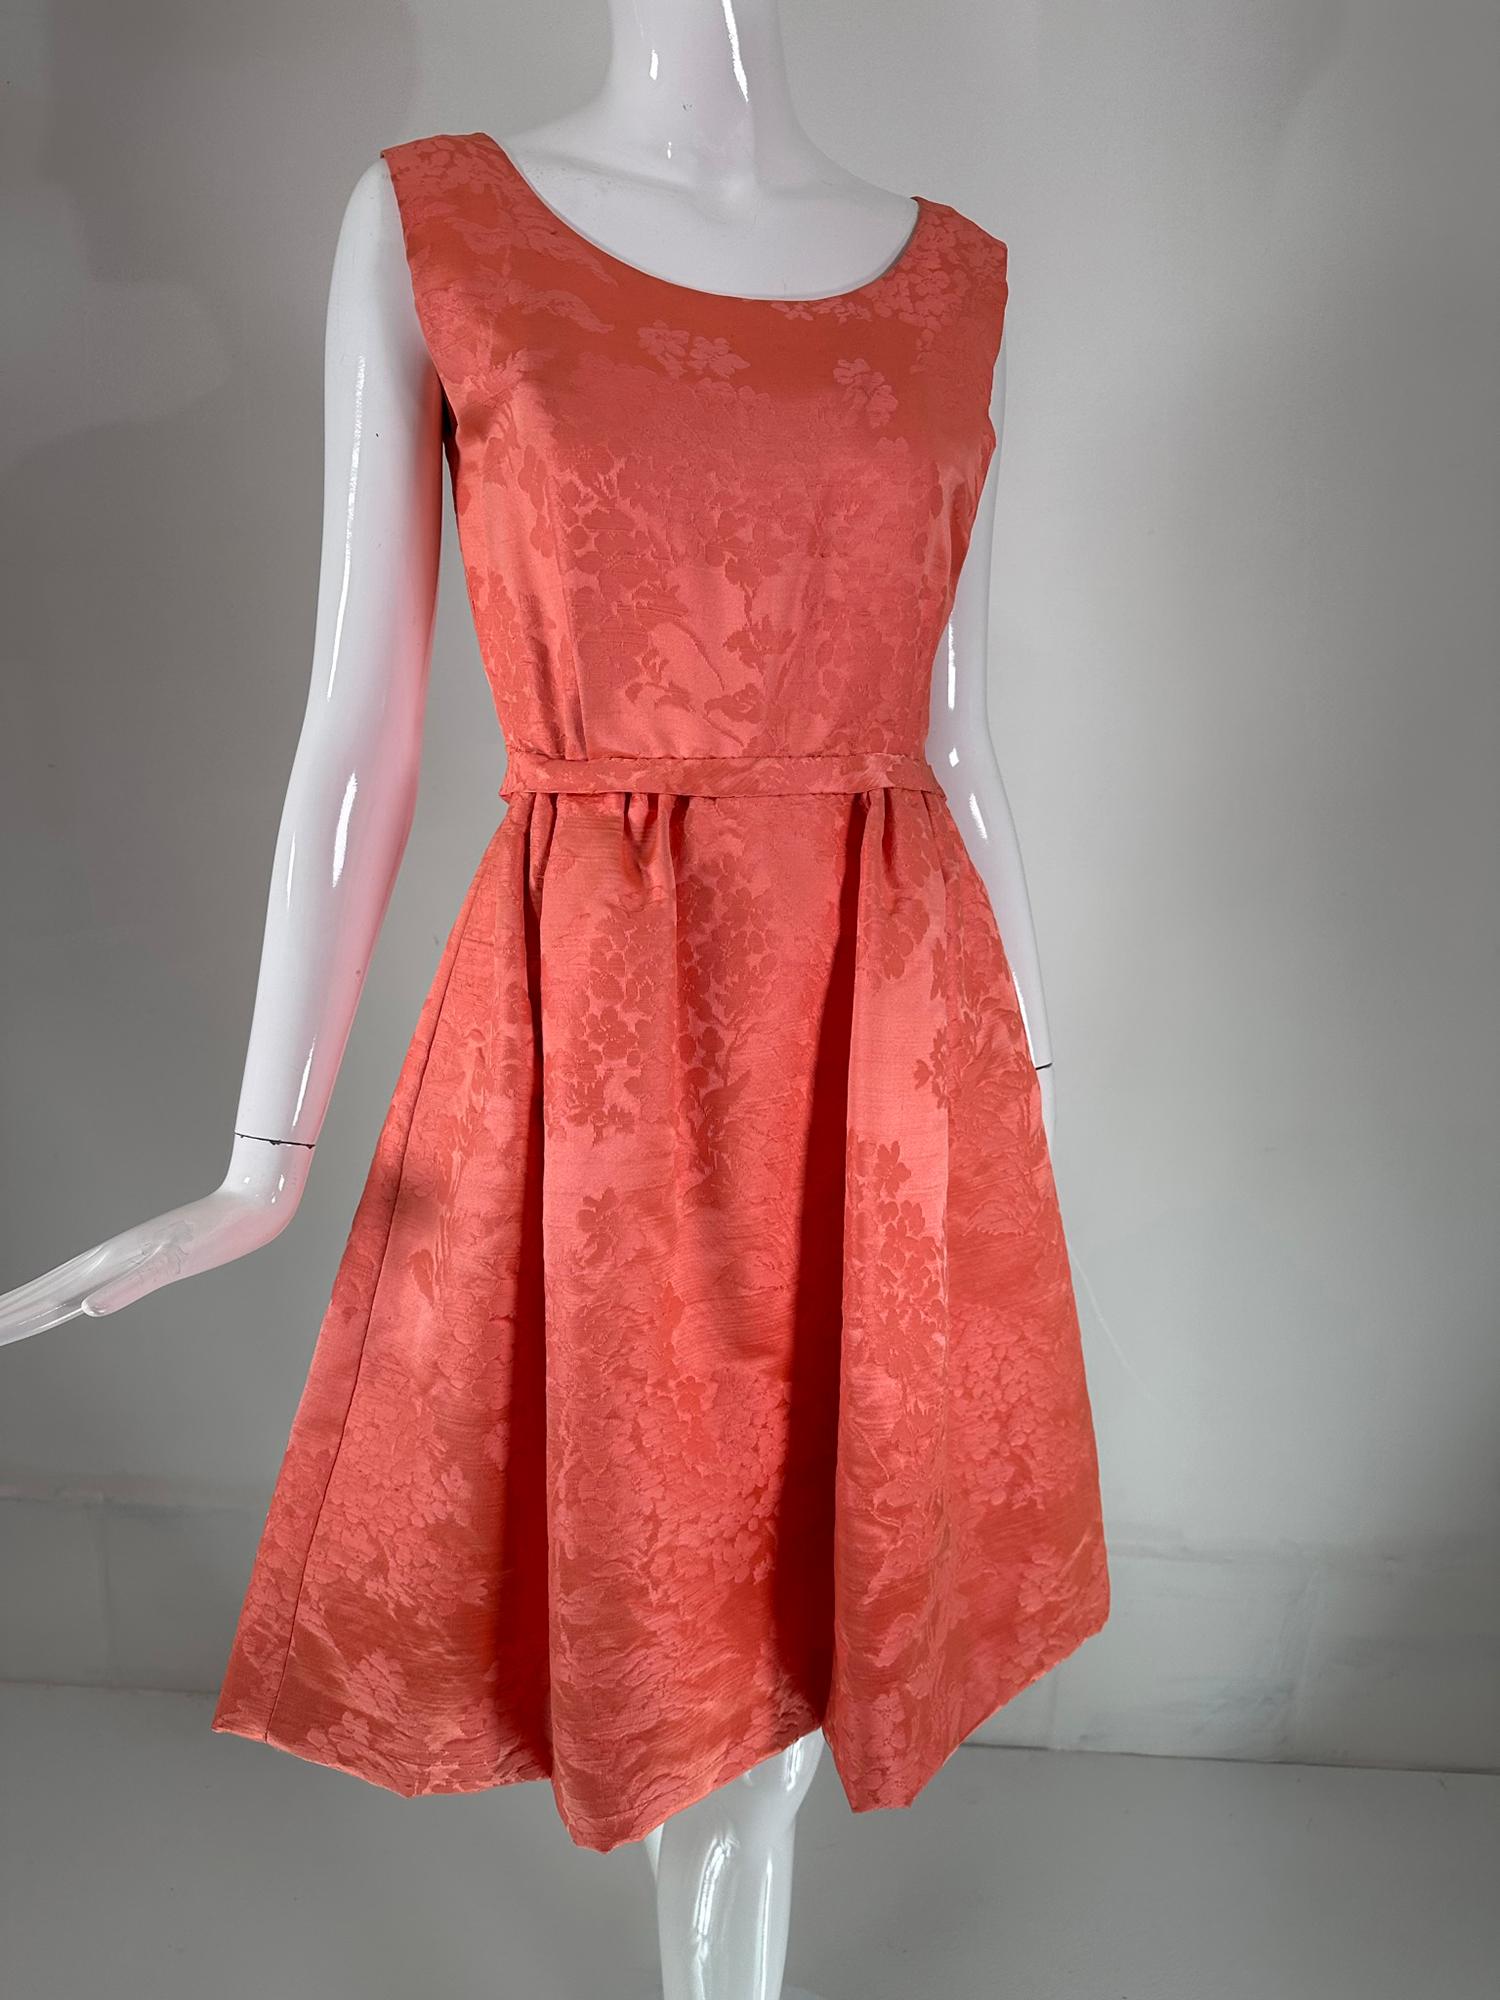 Women's Lanvin Castello Haute Couture Coral Silk Brocade Coat & Dress Ensemble 1950s For Sale